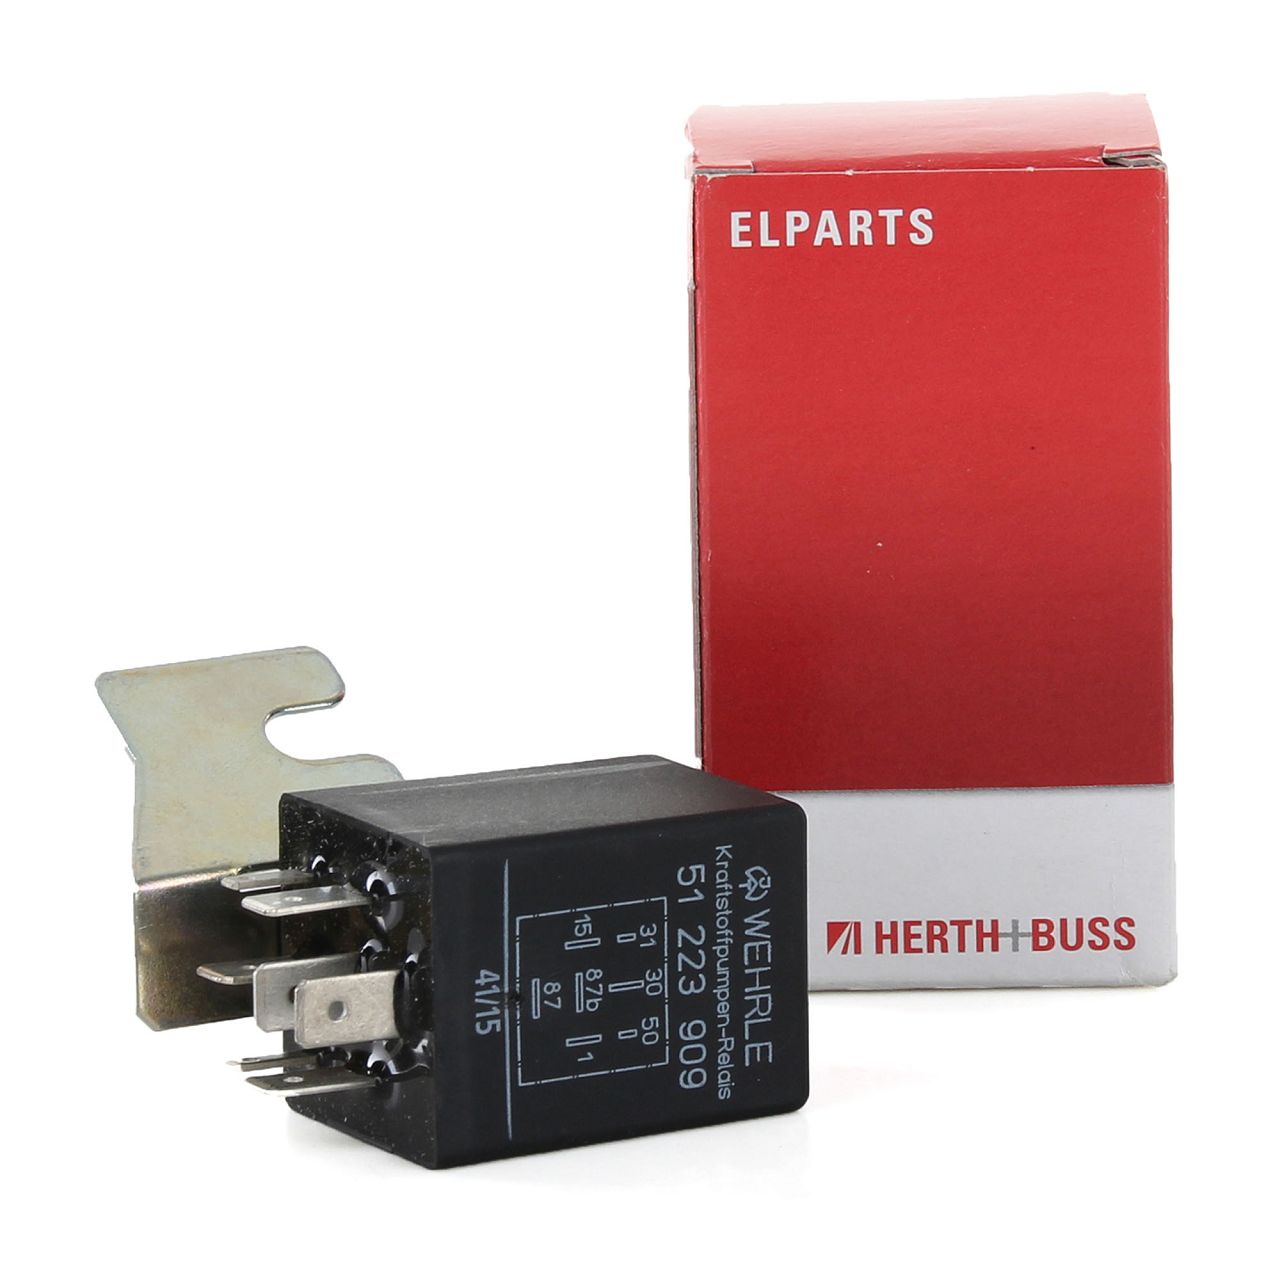 HERTH+BUSS ELPARTS Relais Kraftstoffpumpe für OPEL ASCONA C KADETT E 1.8 90-115